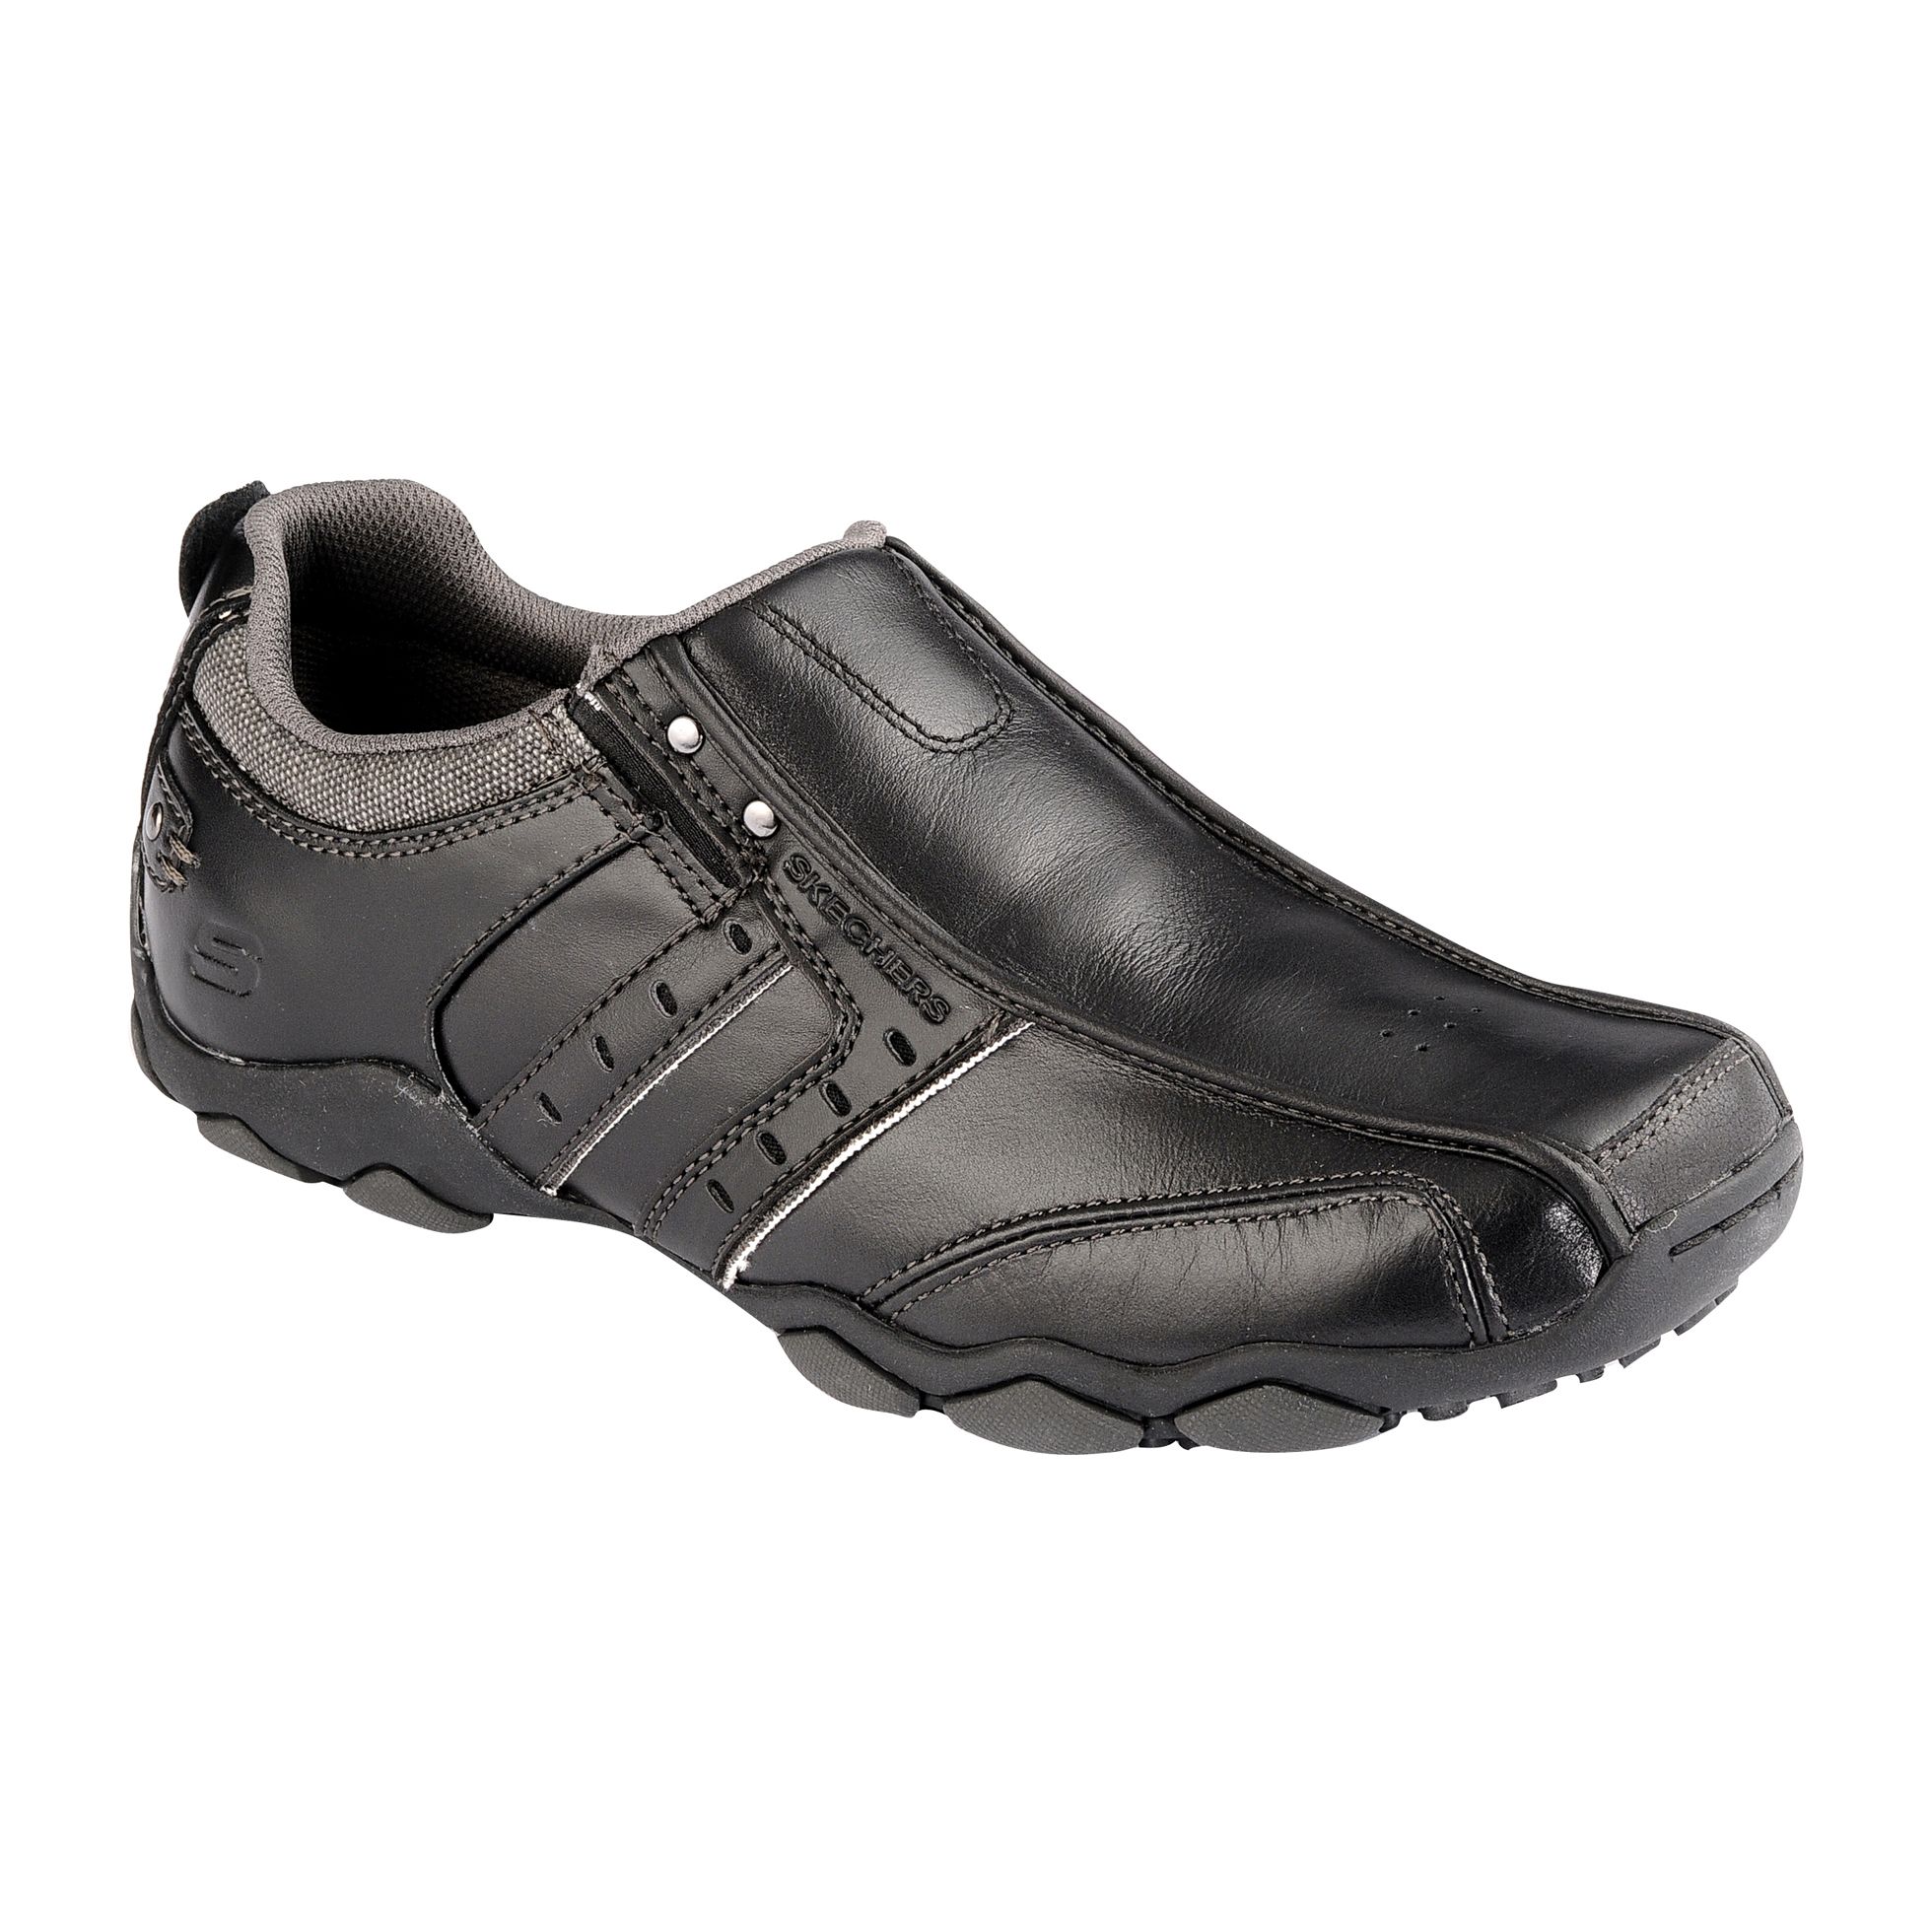 Skechers Men's Heisman Casual Shoe - Black